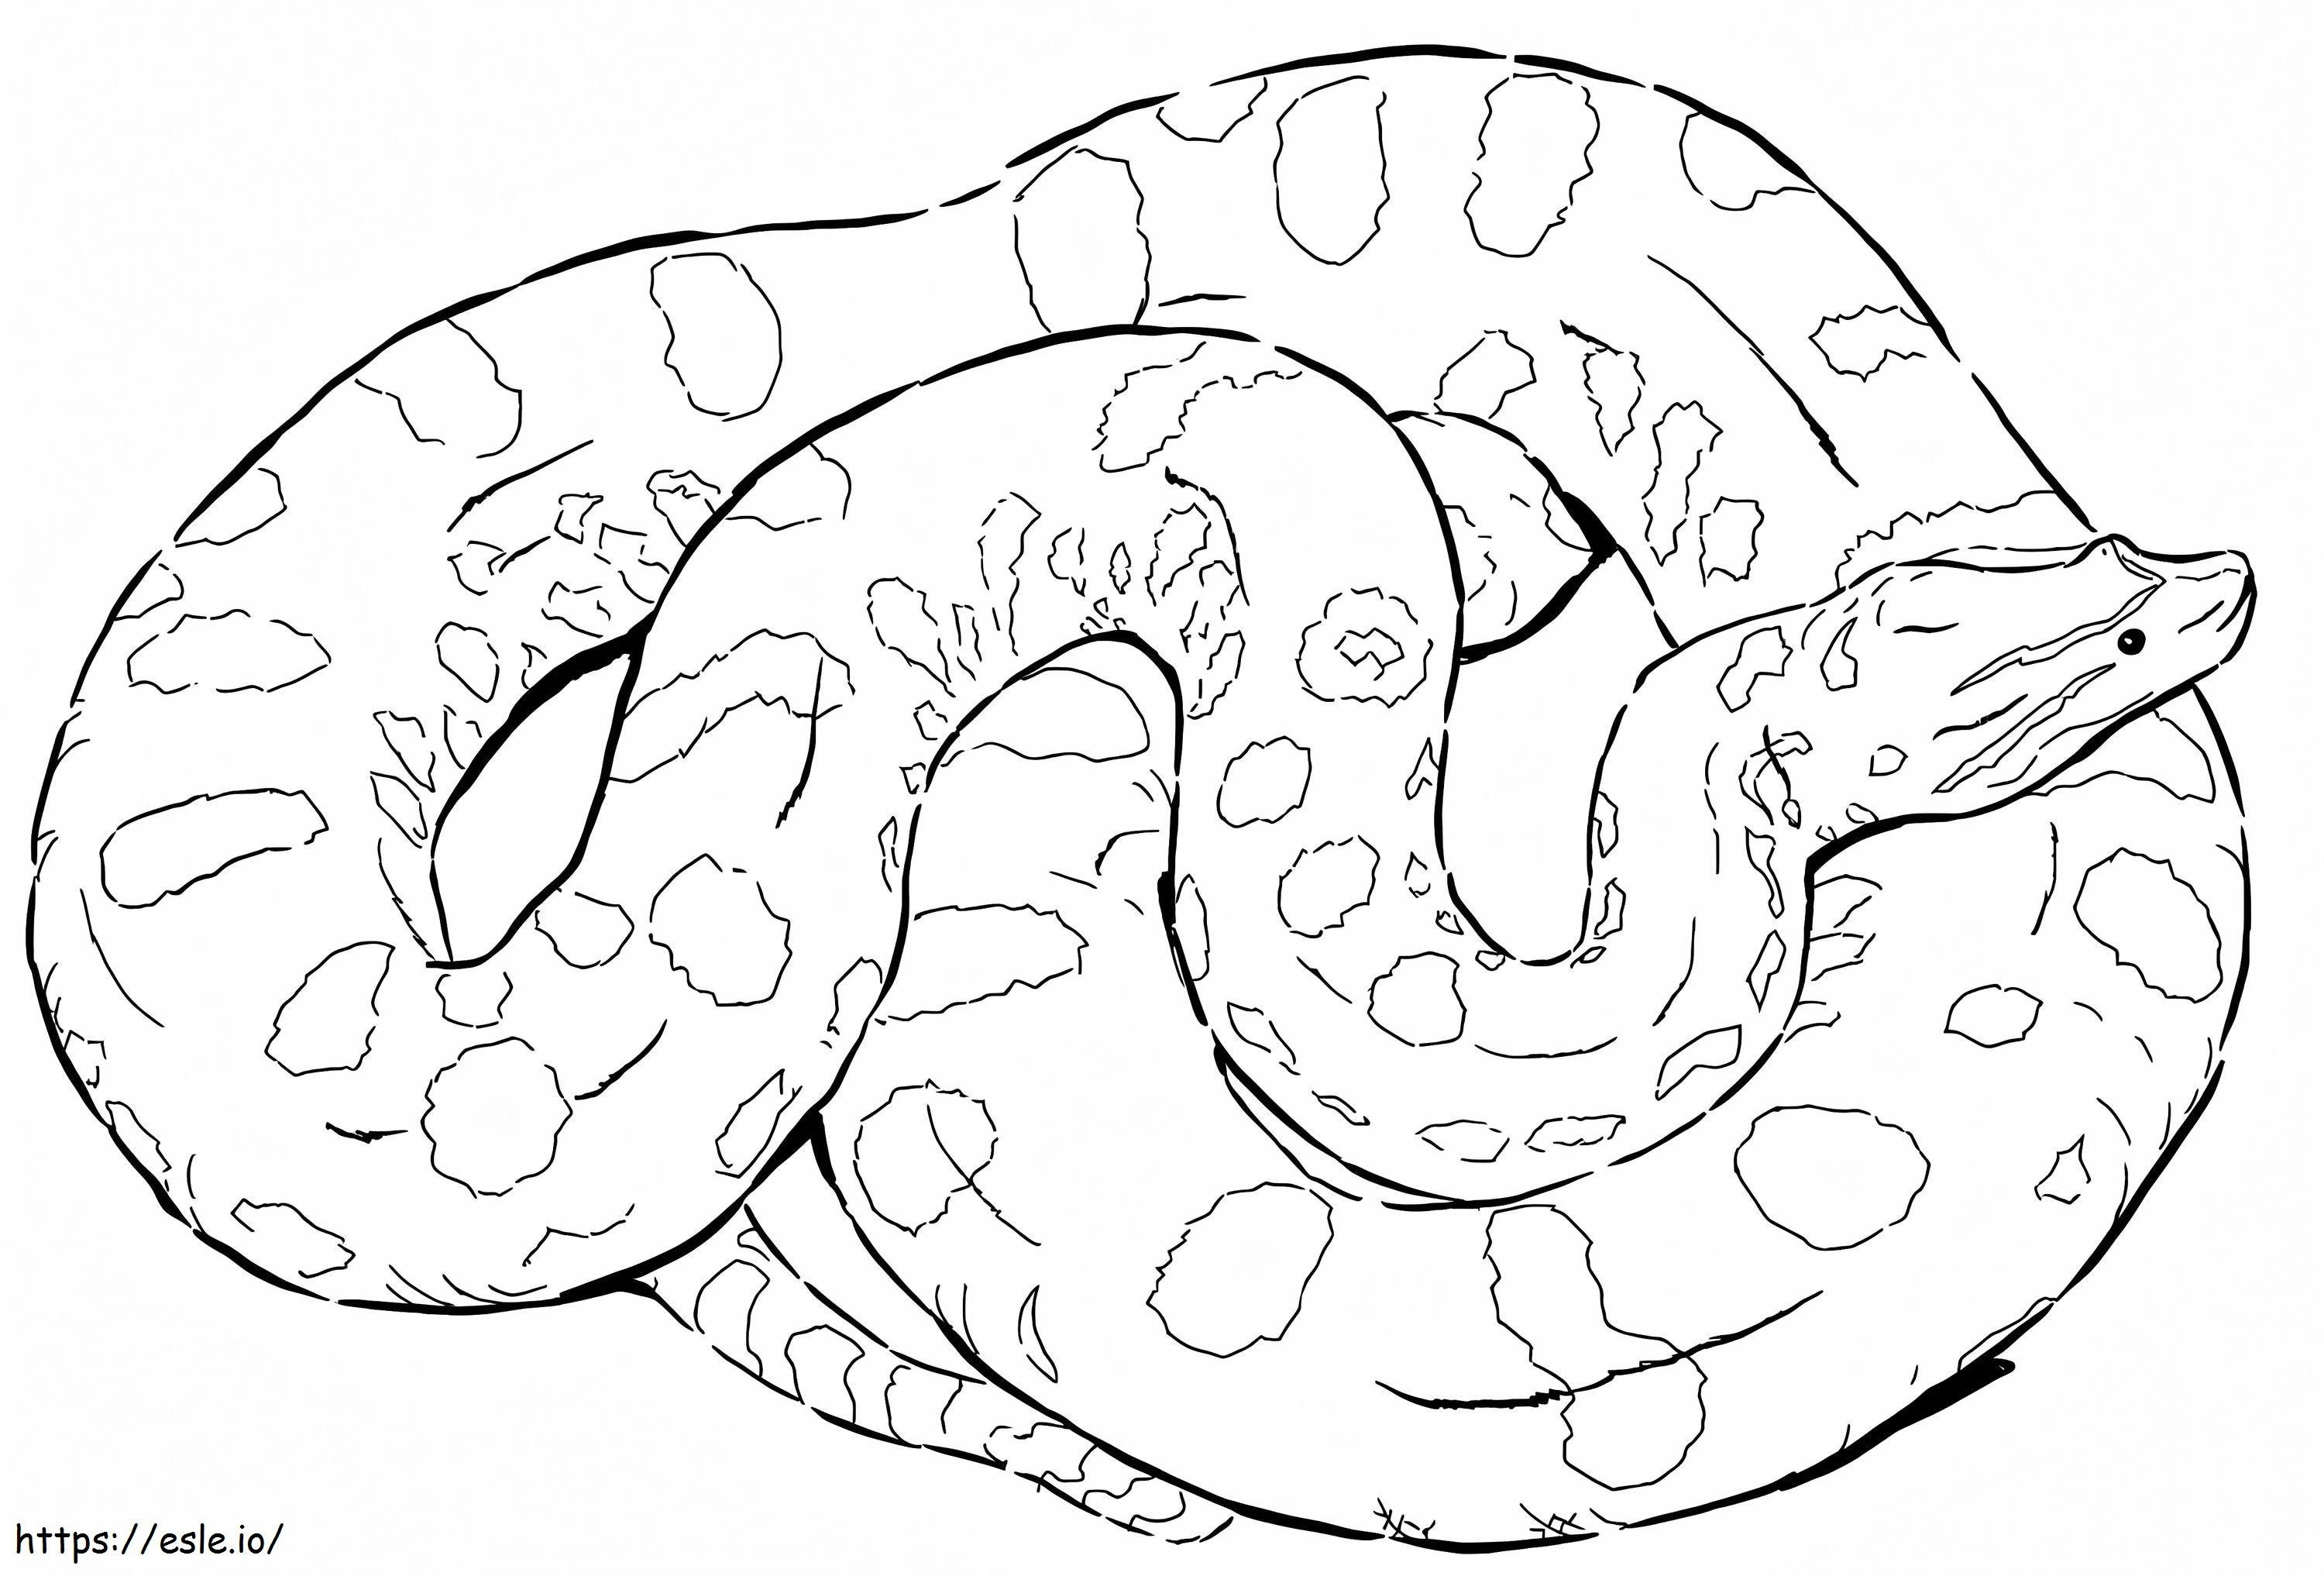 A Green Anaconda coloring page